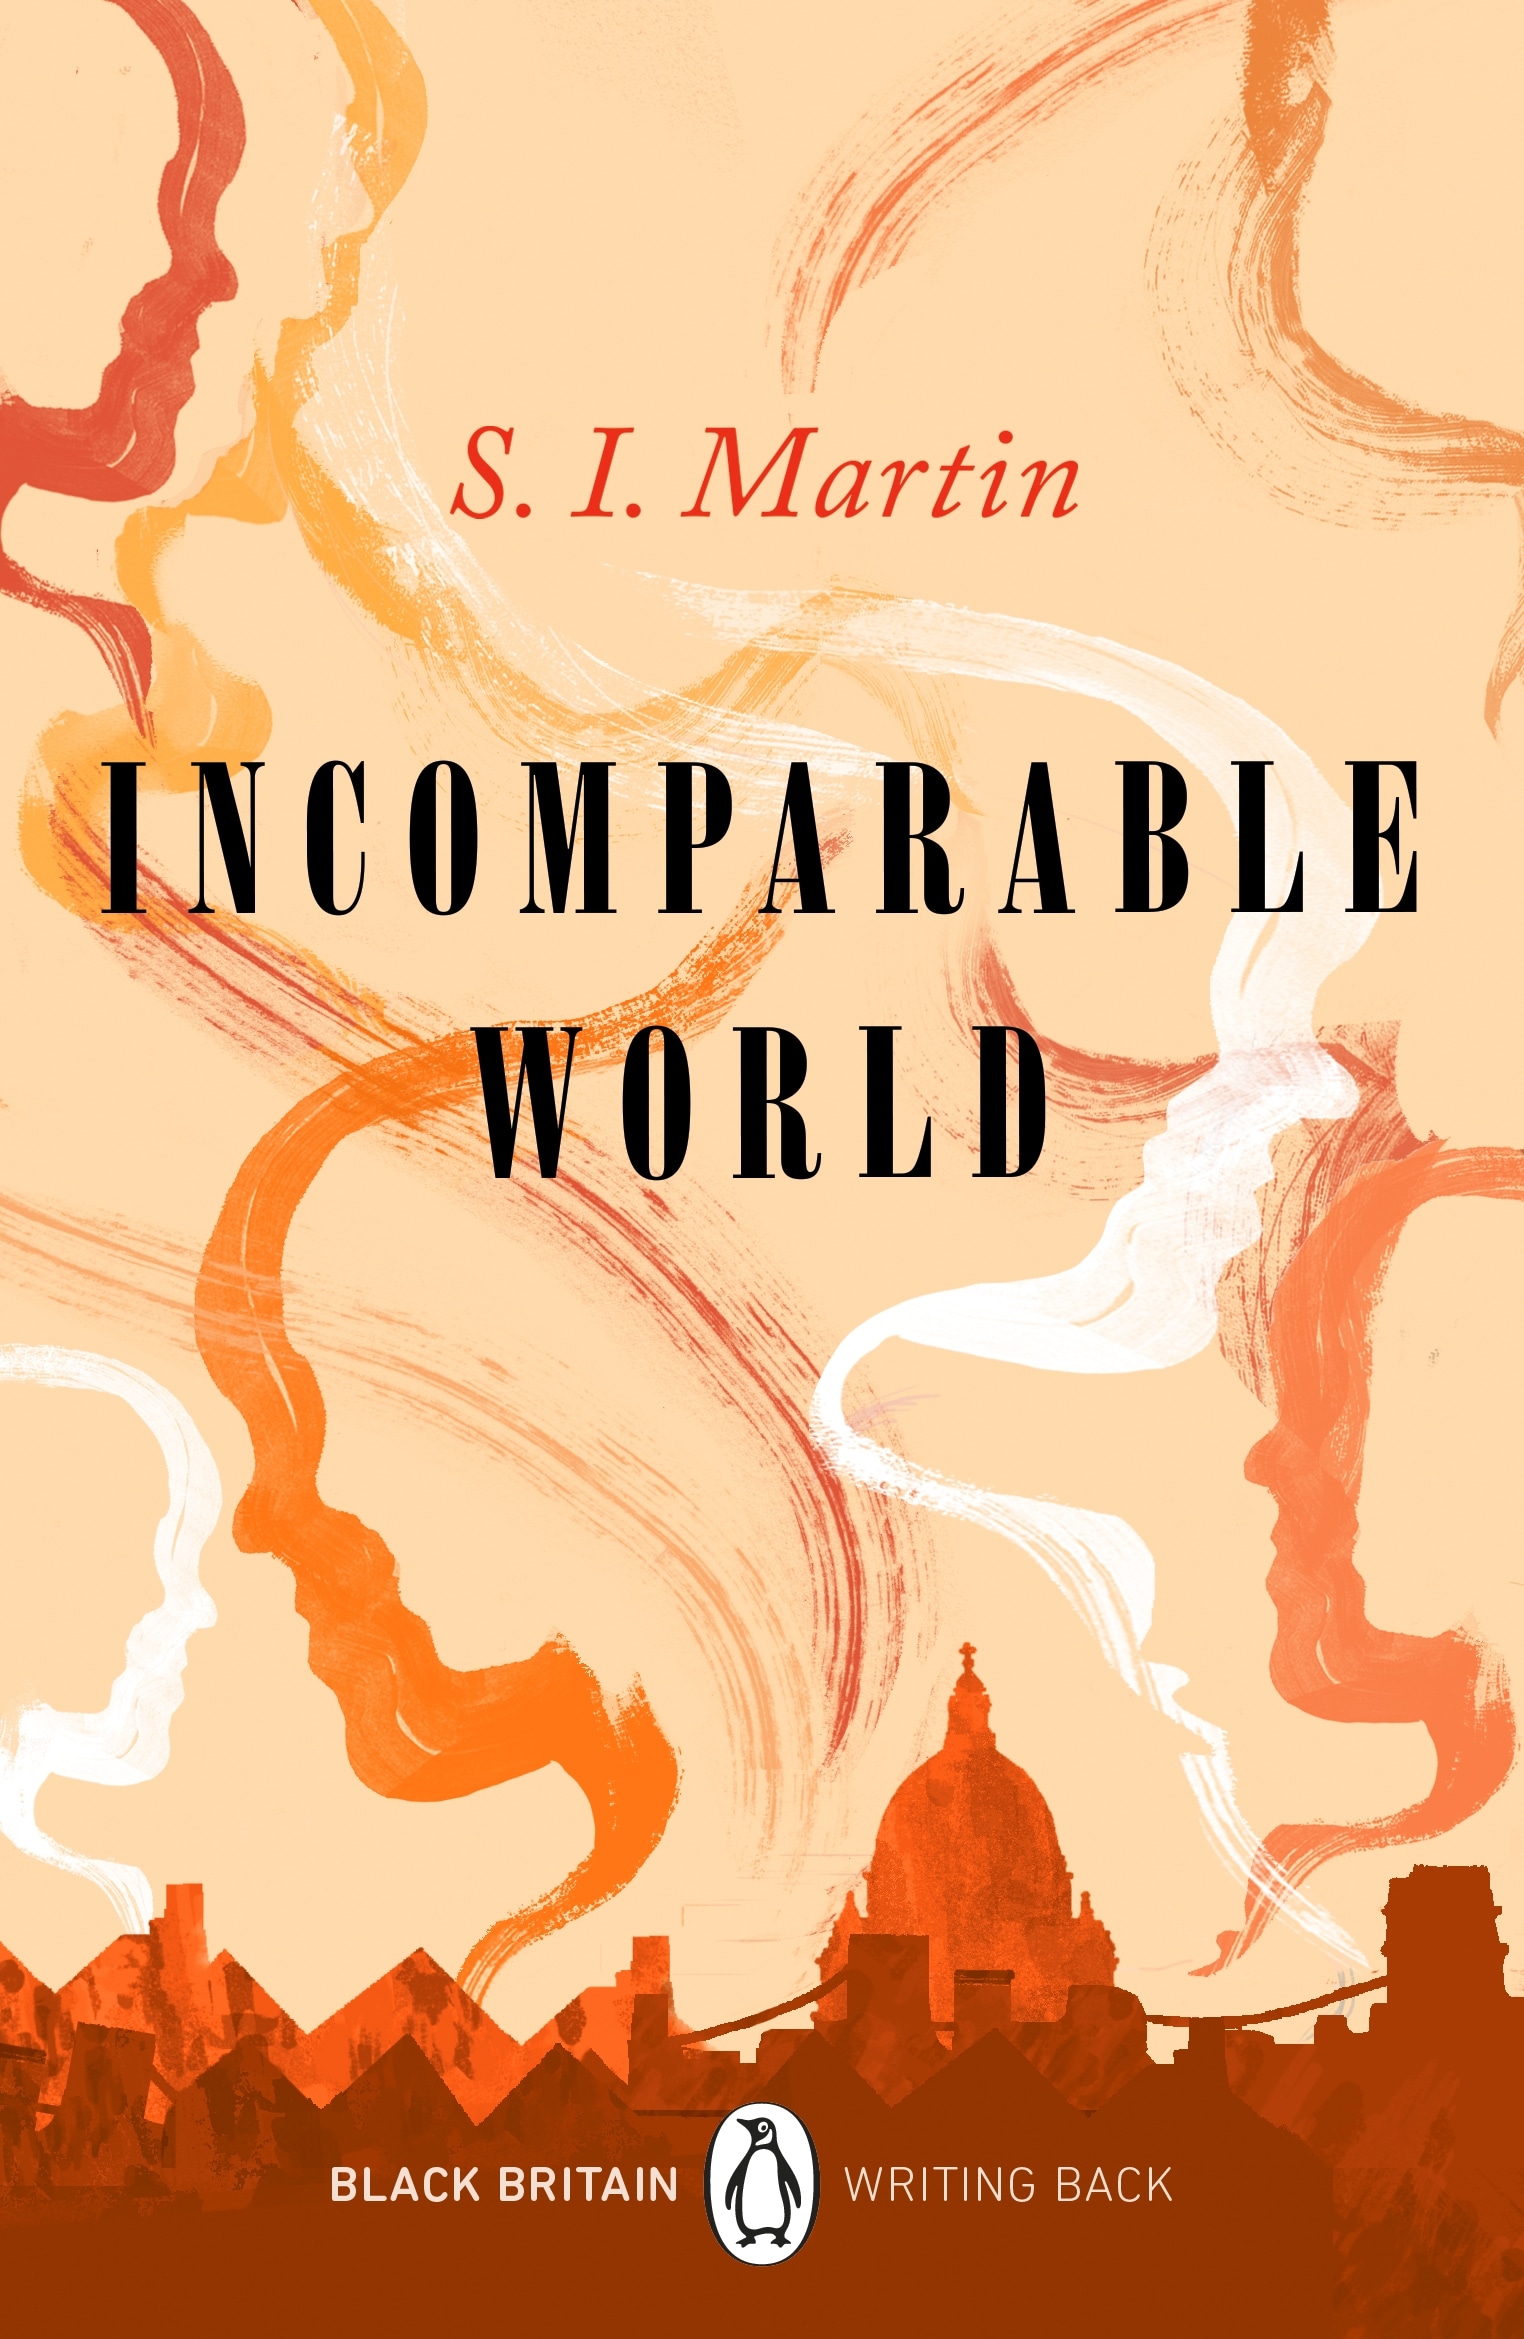 Book “Incomparable World” by S. I. Martin, Bernardine Evaristo — February 4, 2021